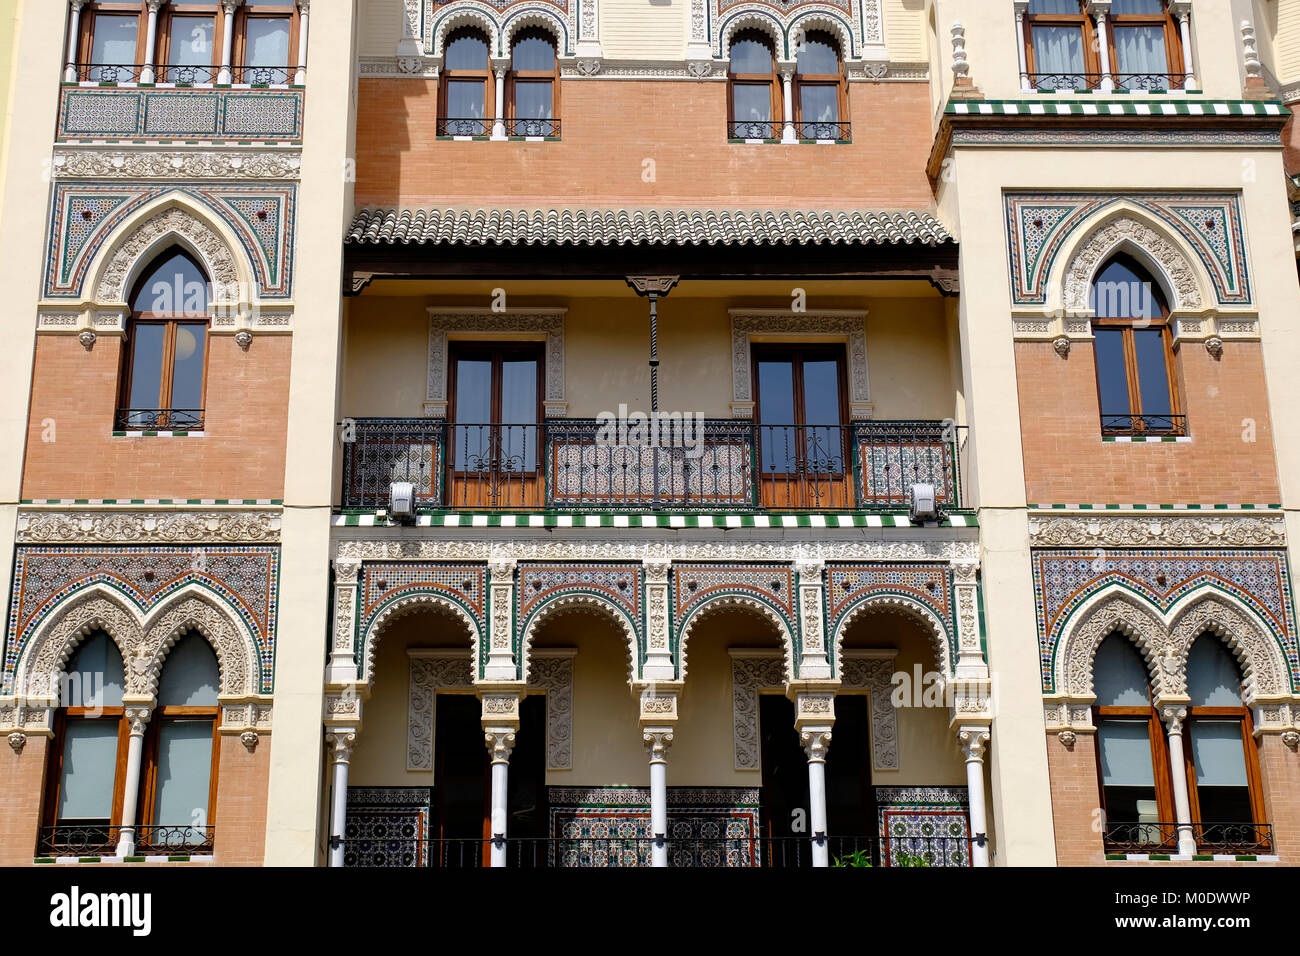 The Adriatic building. Seville, Spain. Stock Photo